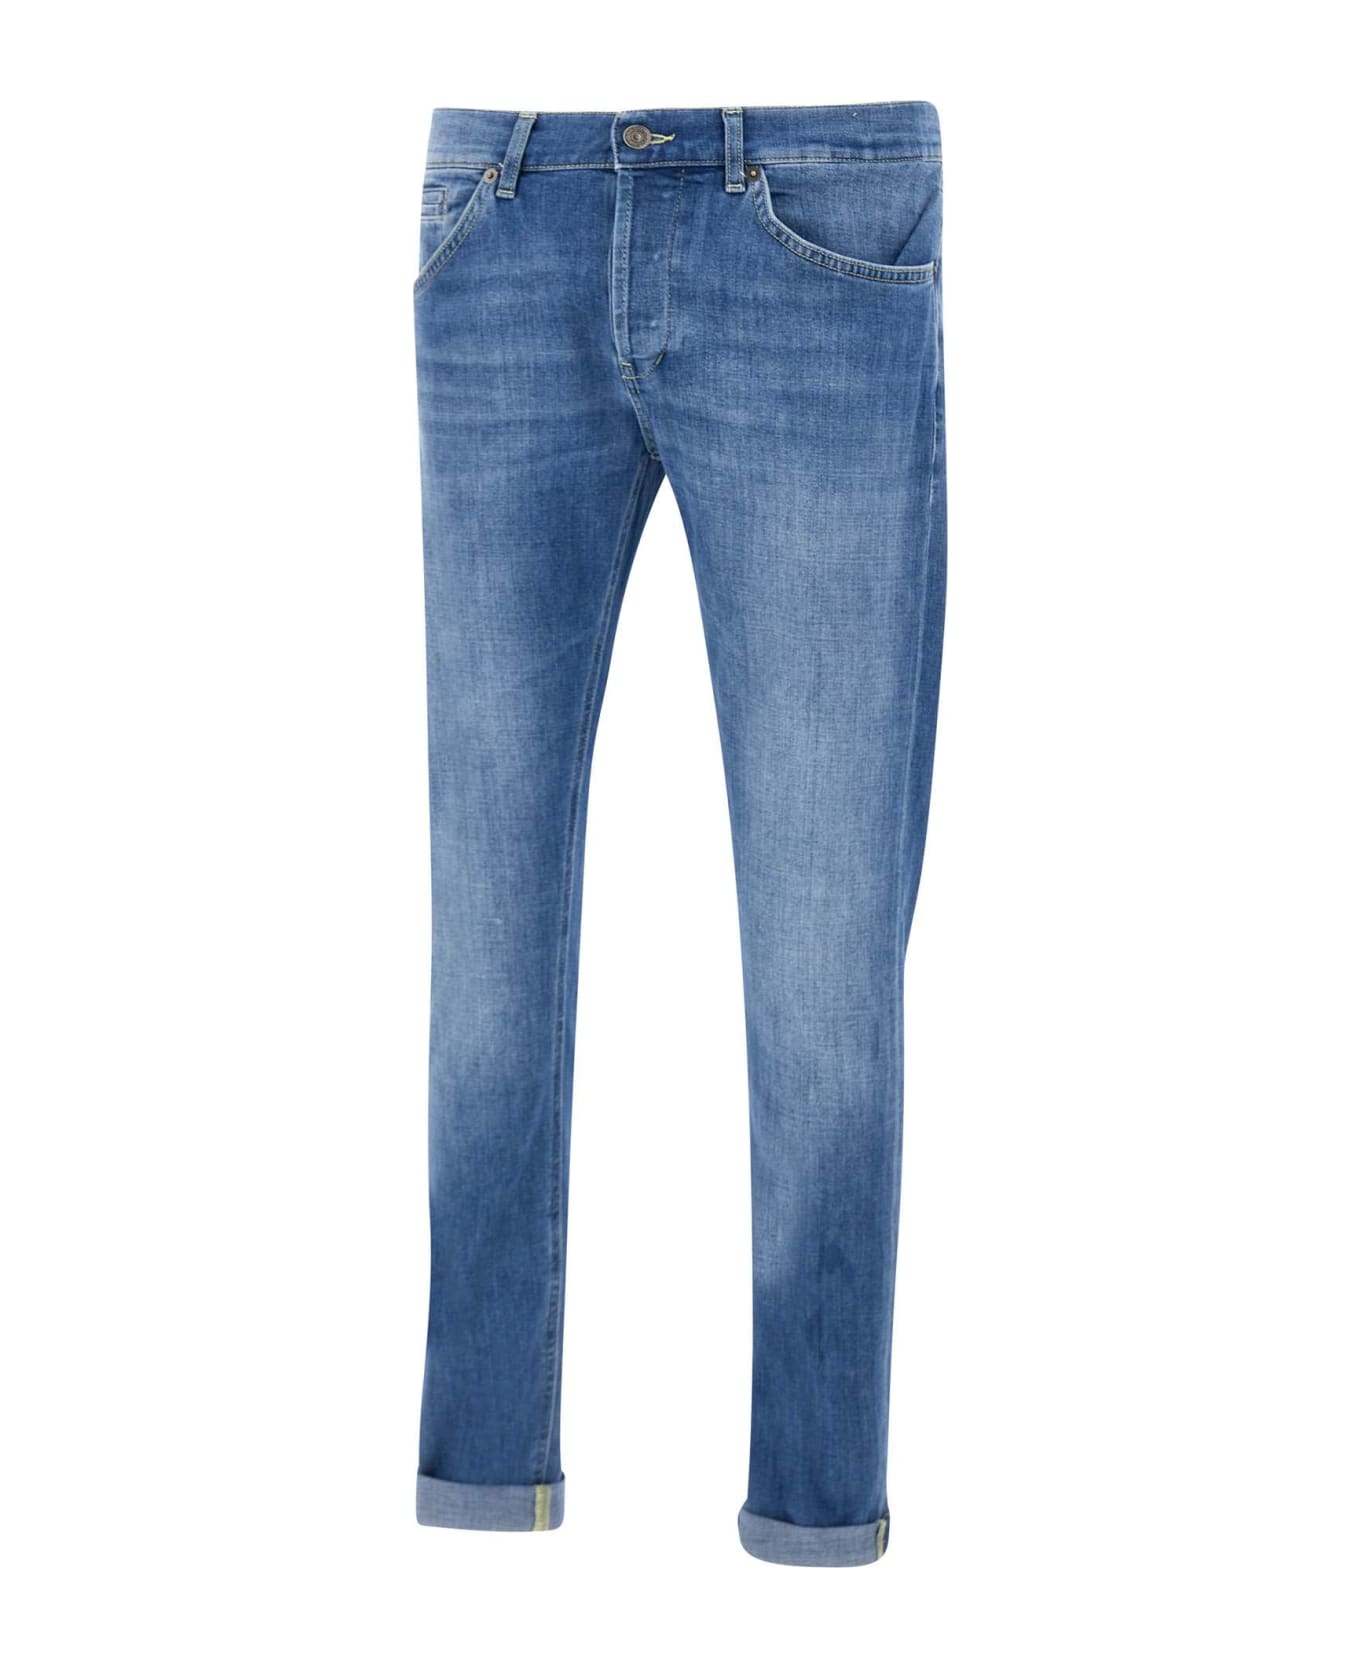 Dondup "george" Jeans - BLUE